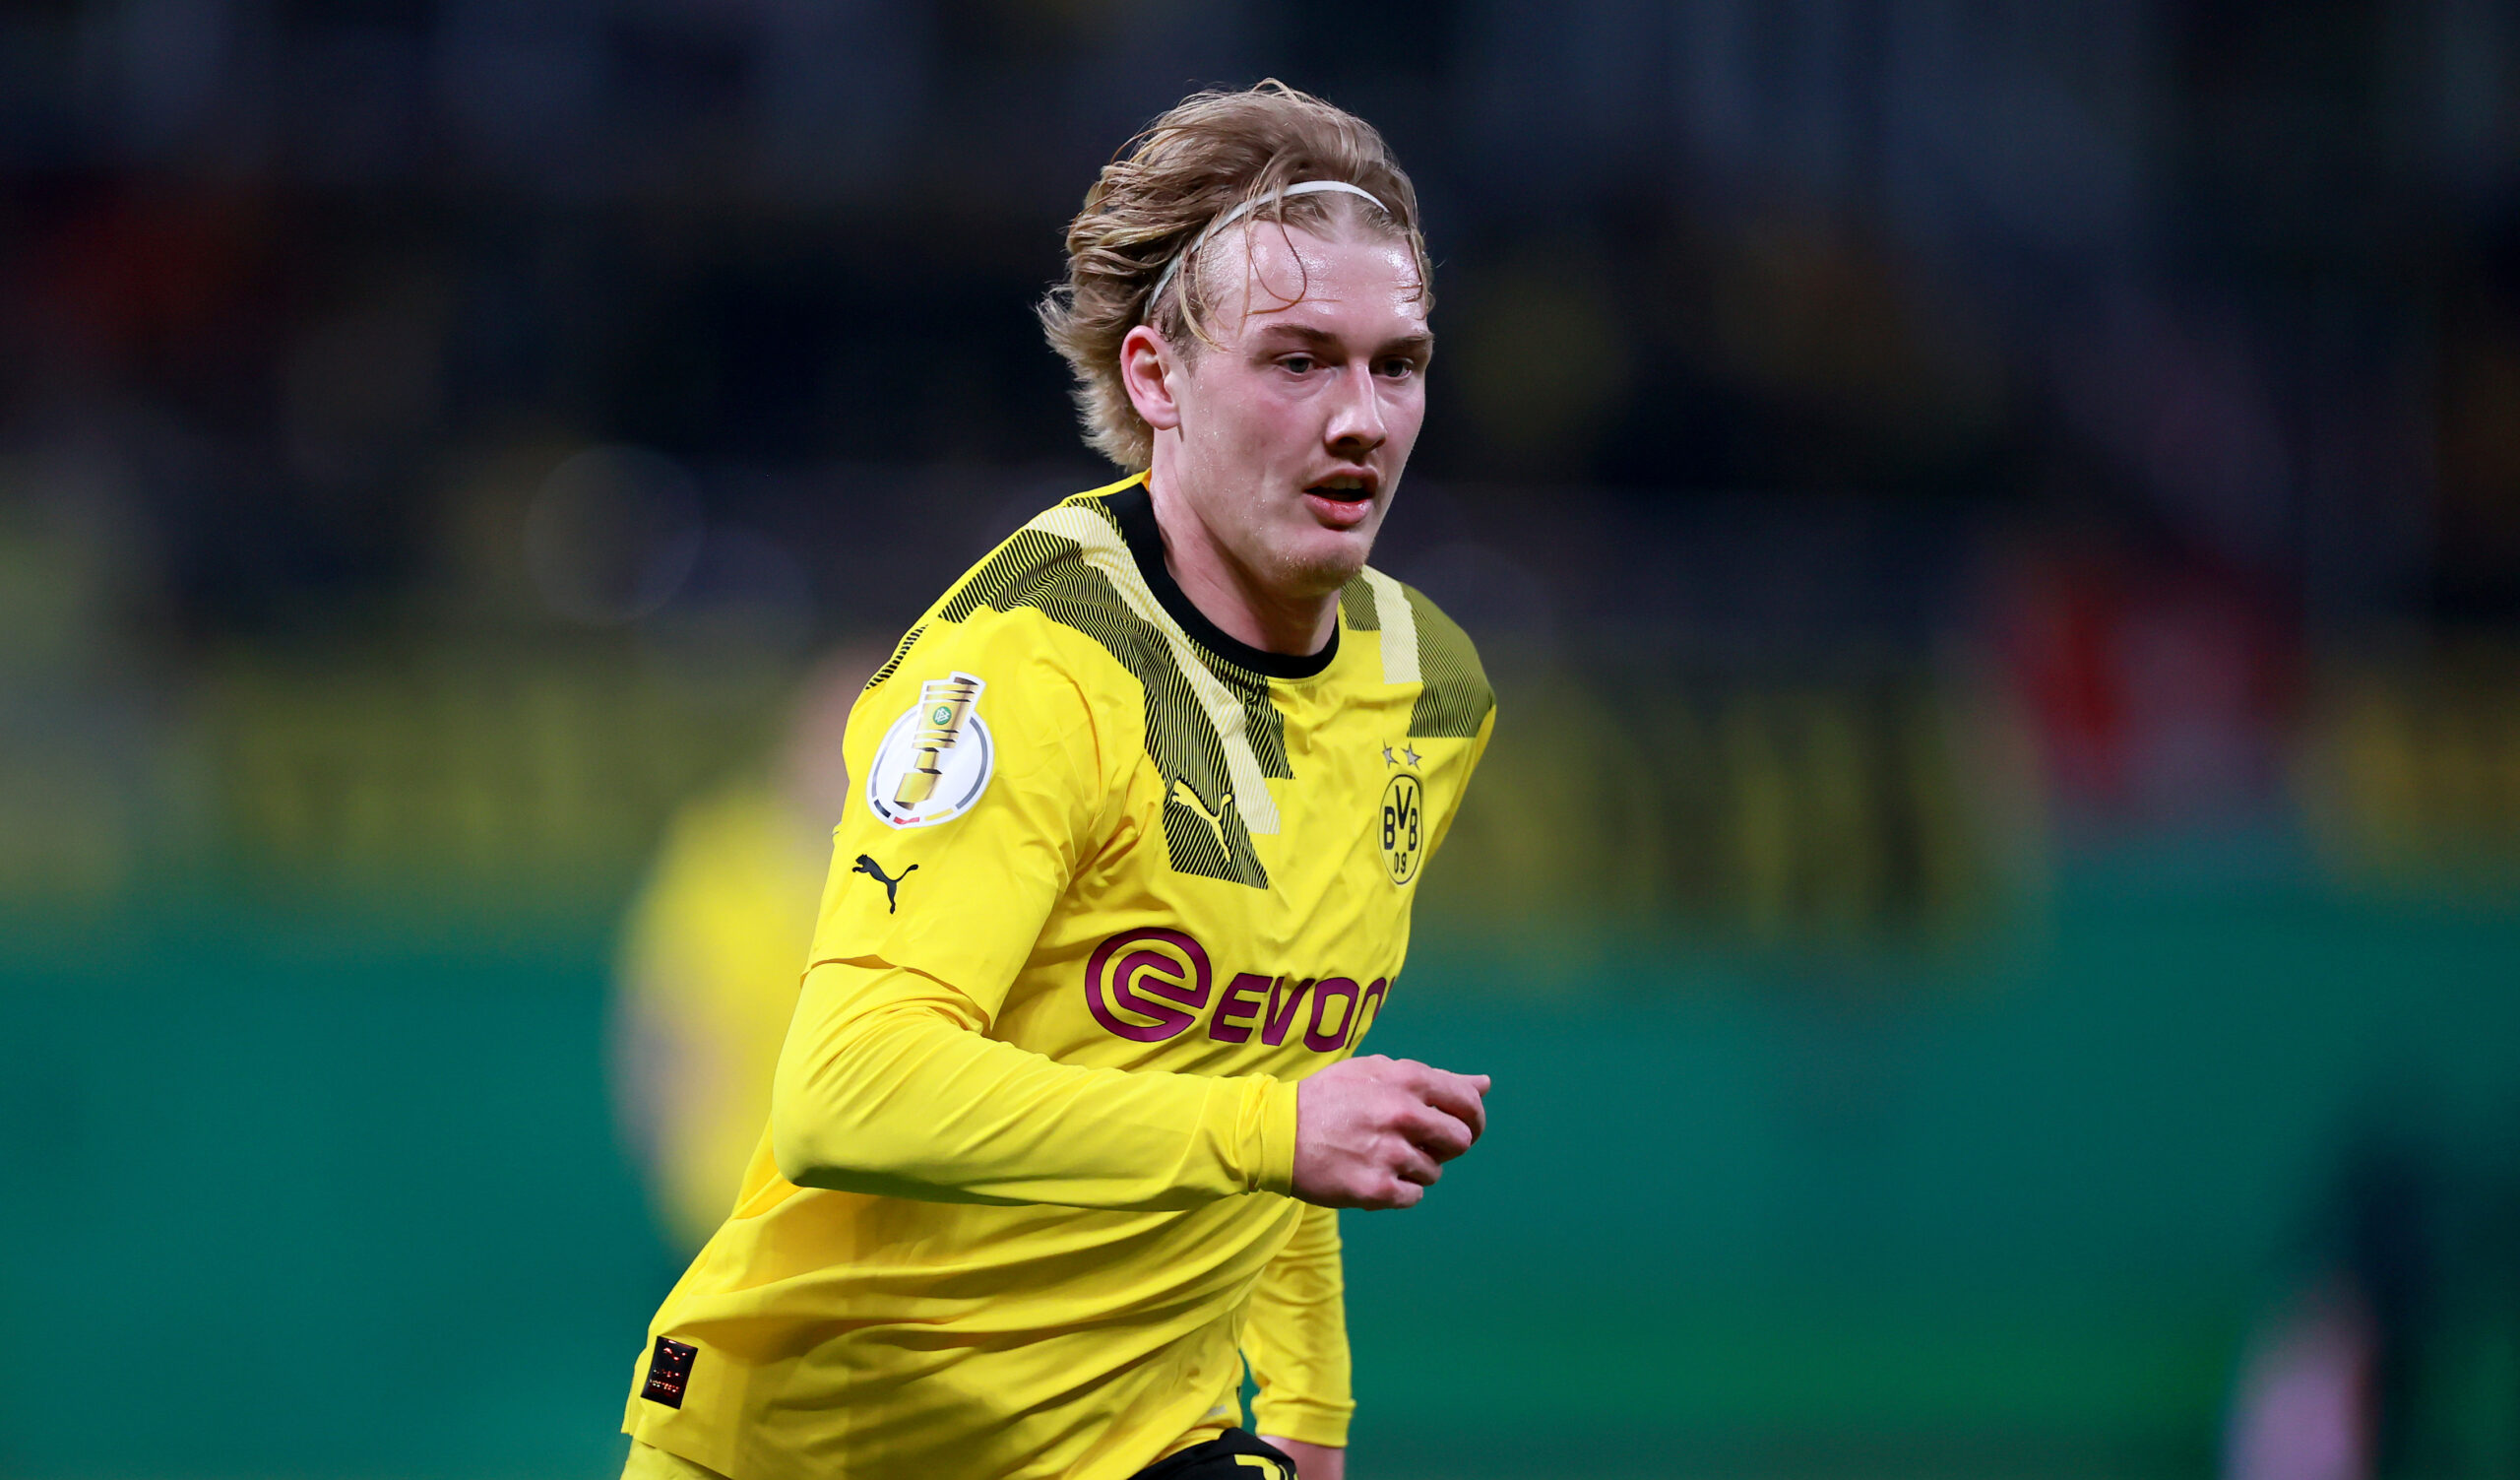 BVB le presenta oferta de renovación de contrato a Julian Brandt. Foto: Getty Images.